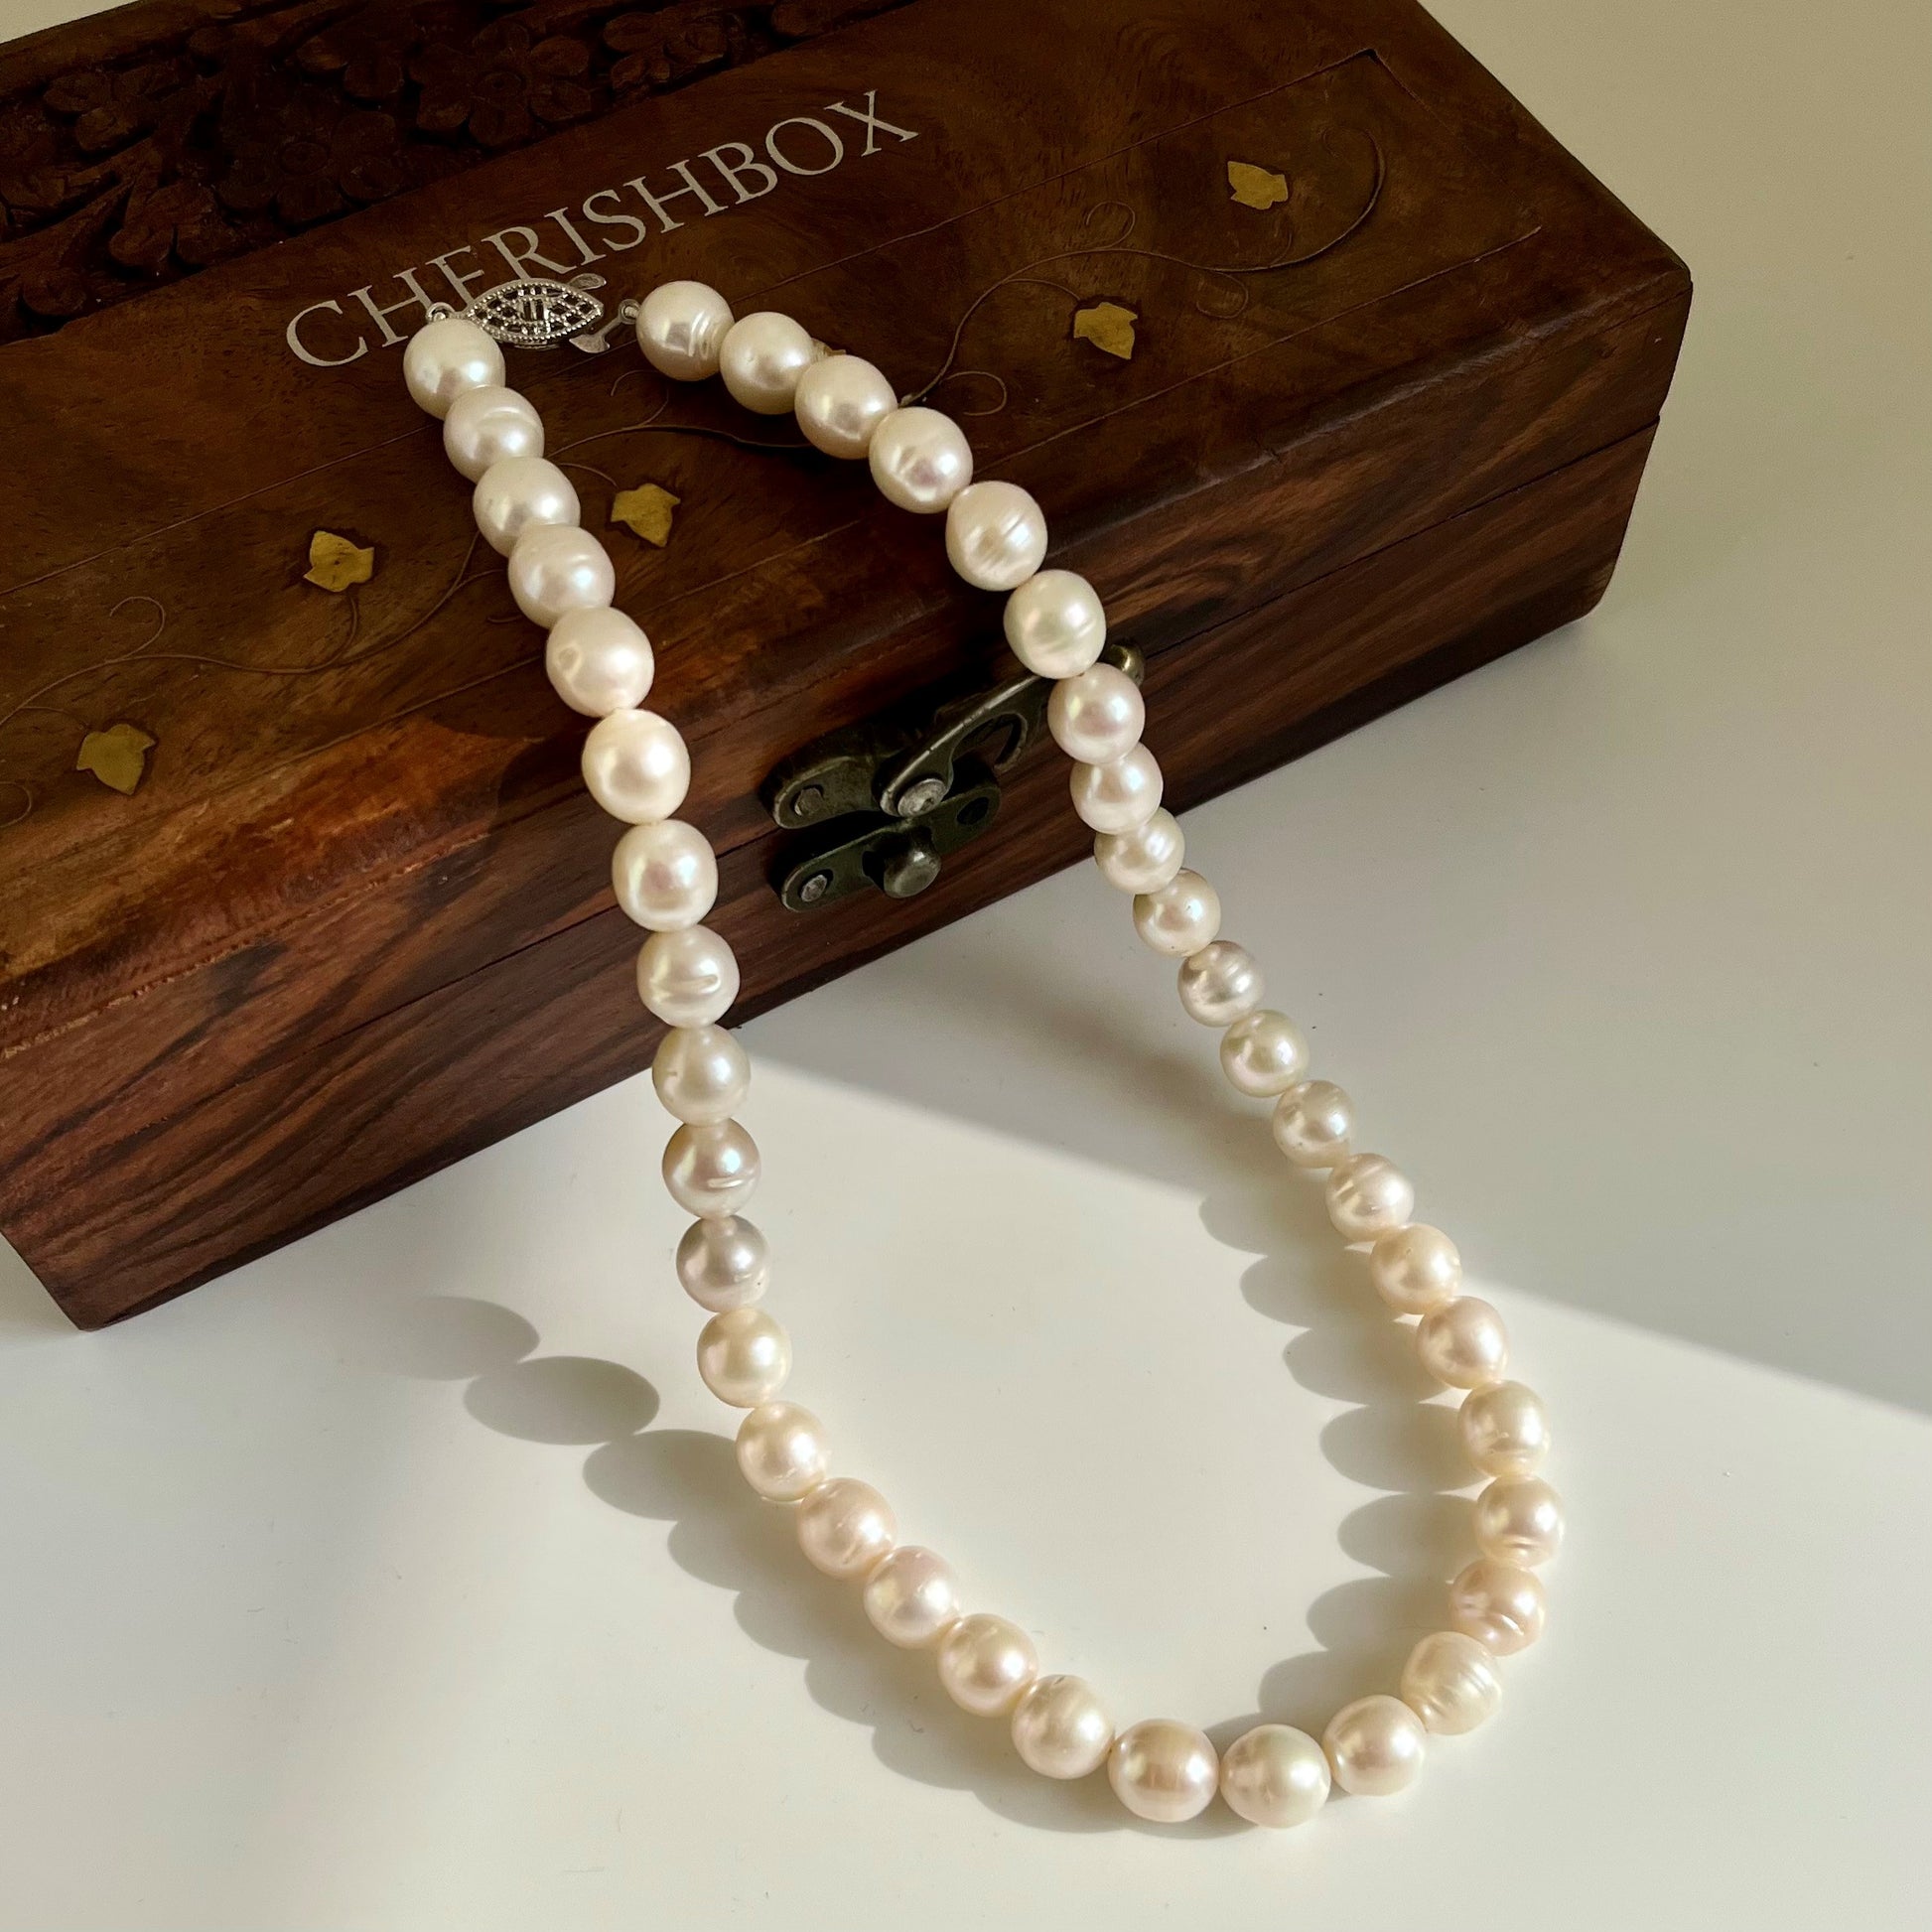 9 mm White Pearl Necklace - CherishBox